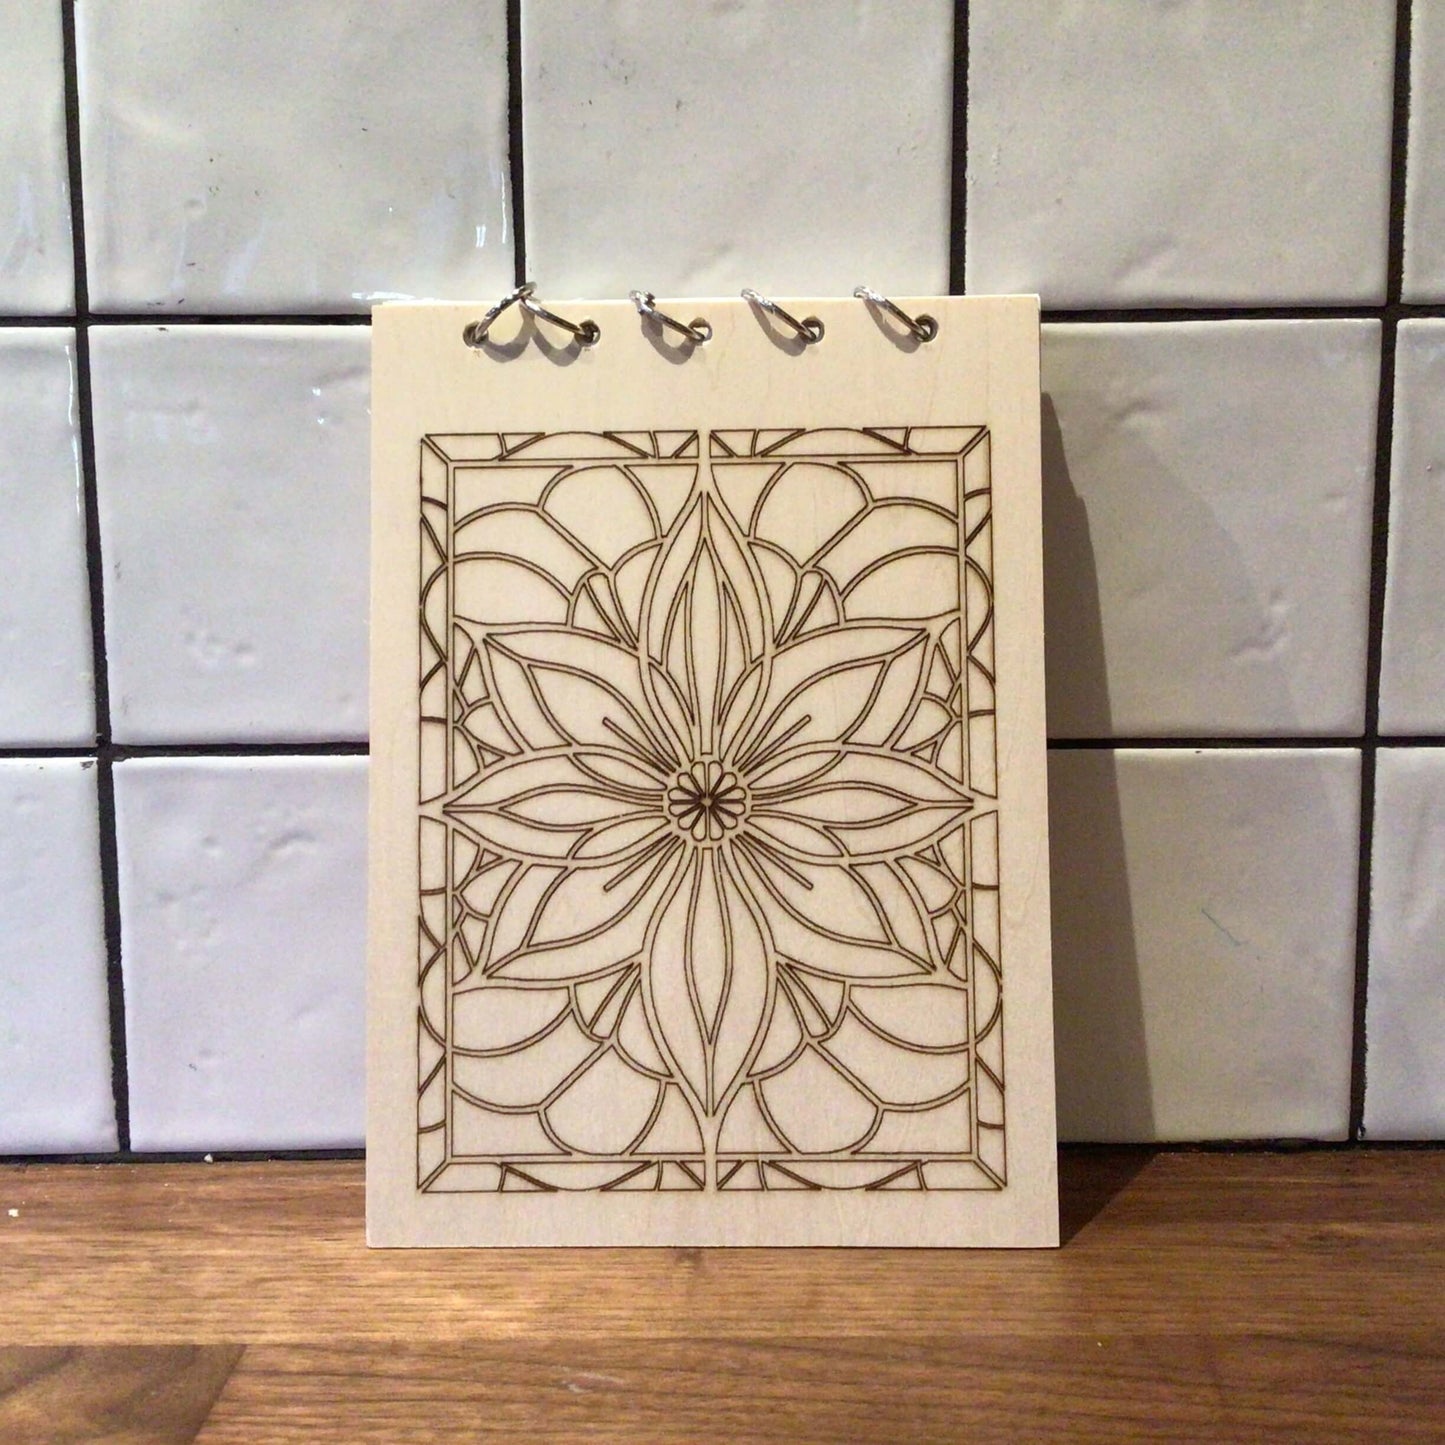 Kleurboek met houten kaft-glas in lood bloemen